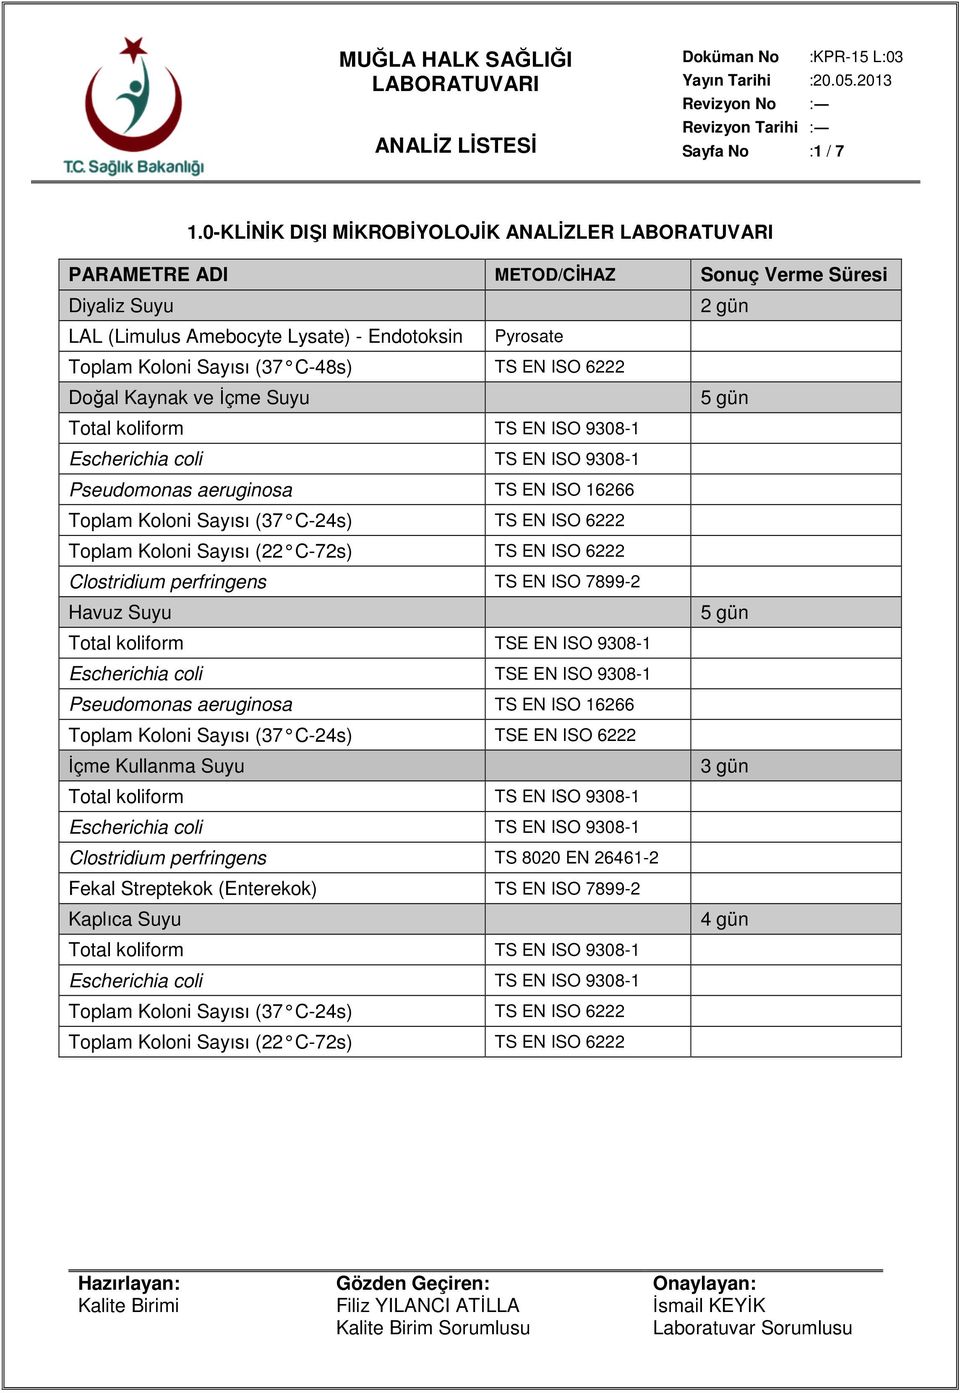 Pseudomonas aeruginosa TS EN ISO 16266 Toplam Koloni Sayısı (37 C-24s) TS EN ISO 6222 Toplam Koloni Sayısı (22 C-72s) TS EN ISO 6222 Clostridium perfringens TS EN ISO 7899-2 Havuz Suyu Total